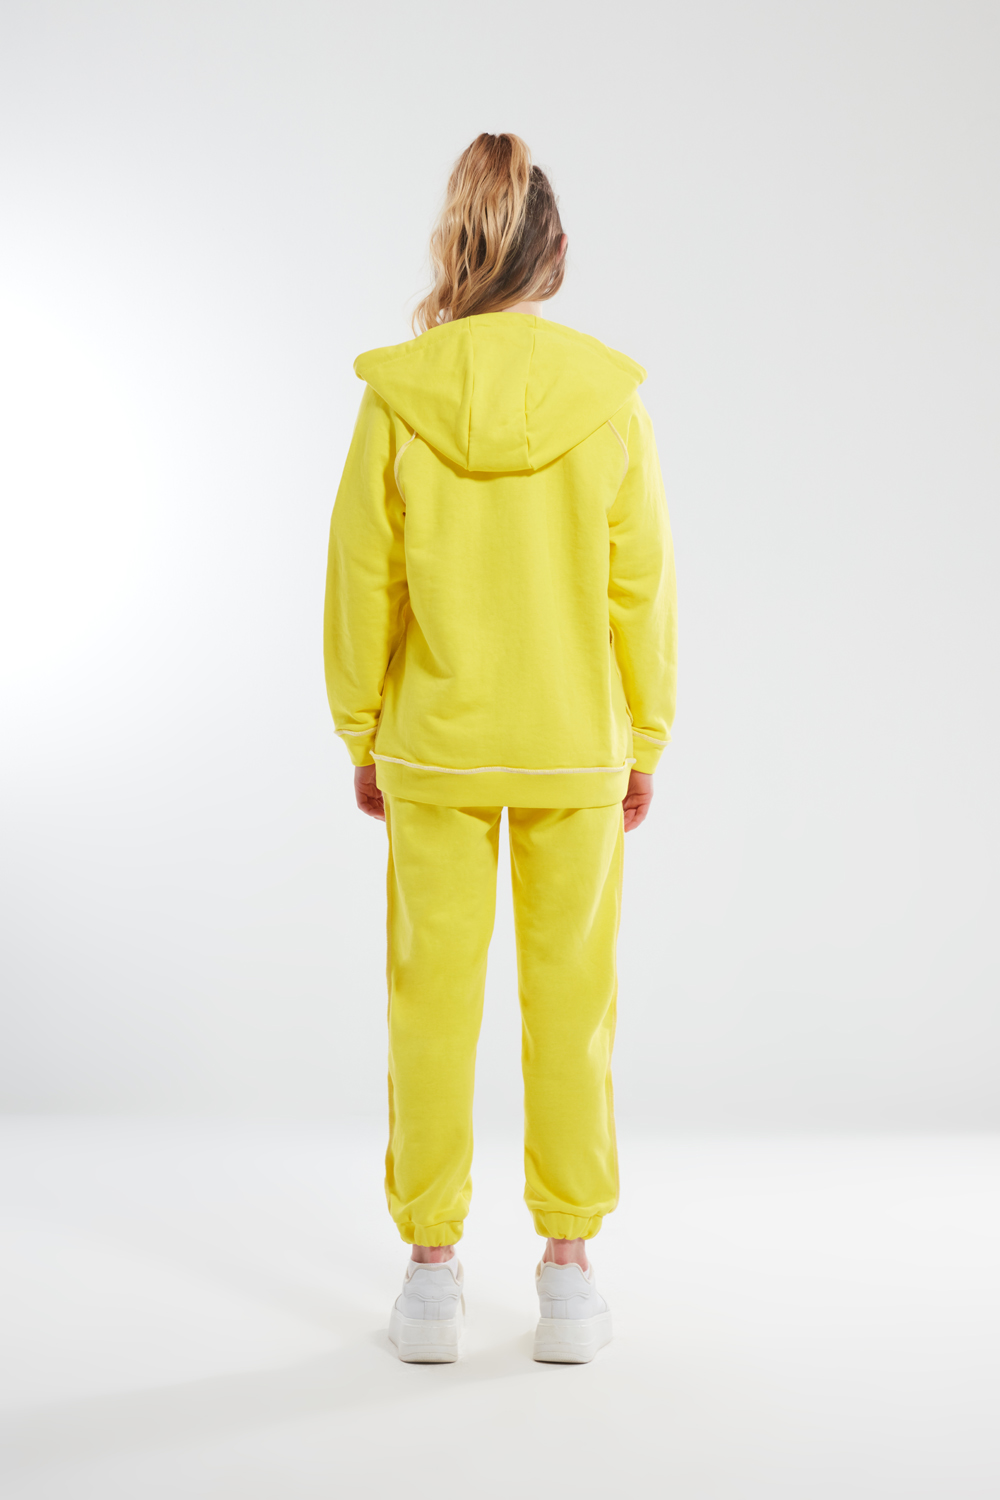 Zippered Bedstead Stitched Yellow Sweatshirt